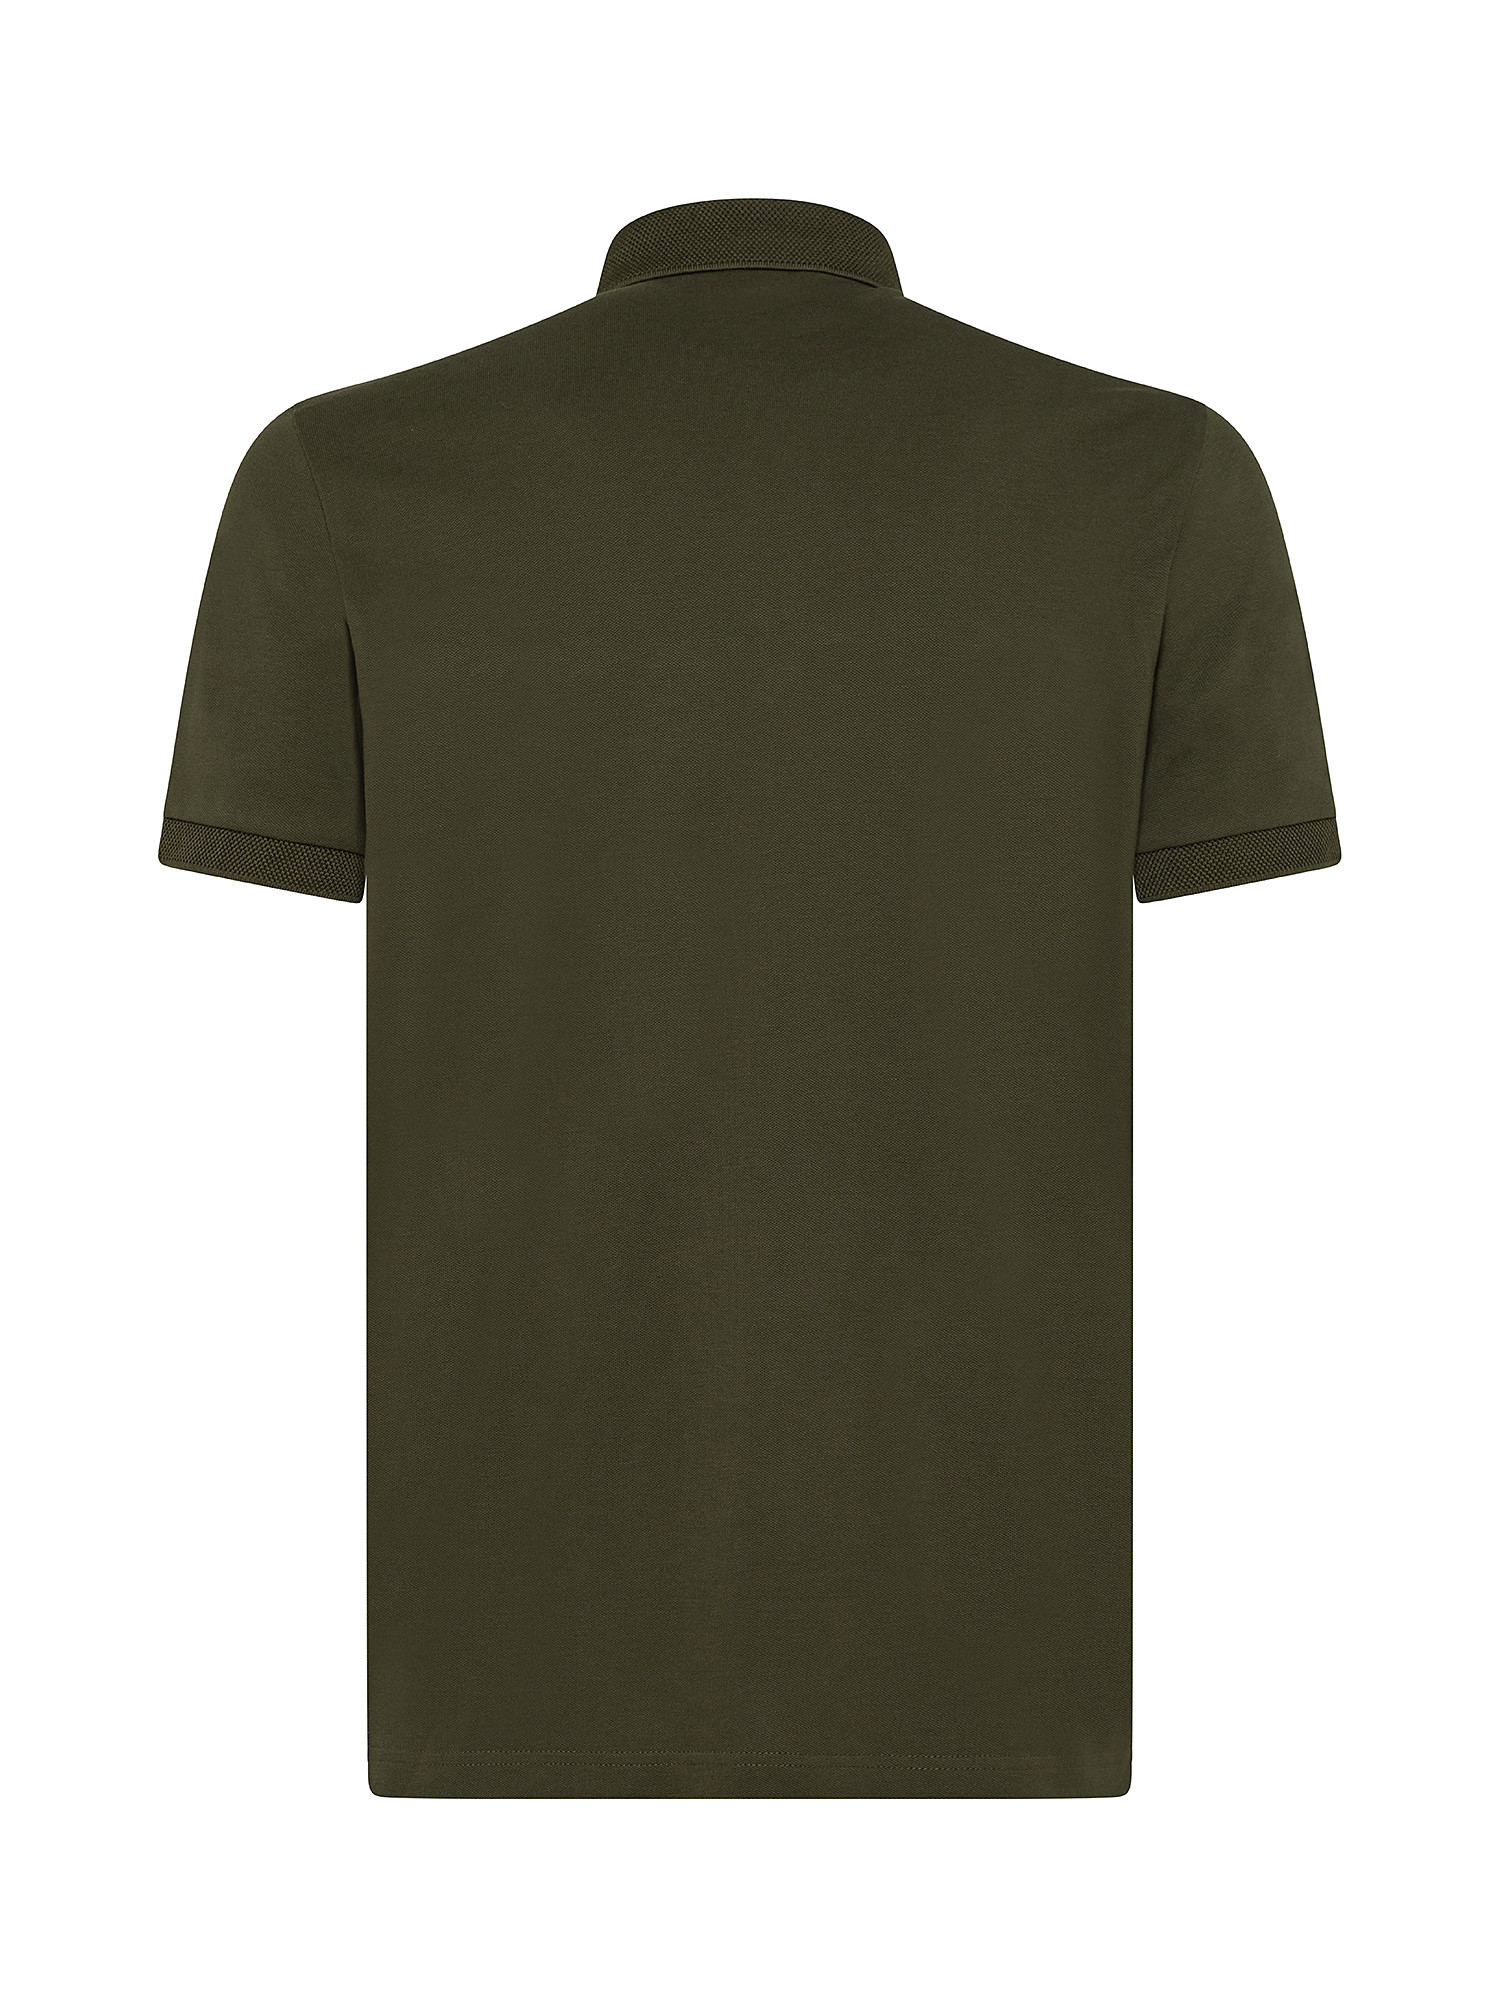 Polo shirt, Dark Green, large image number 1